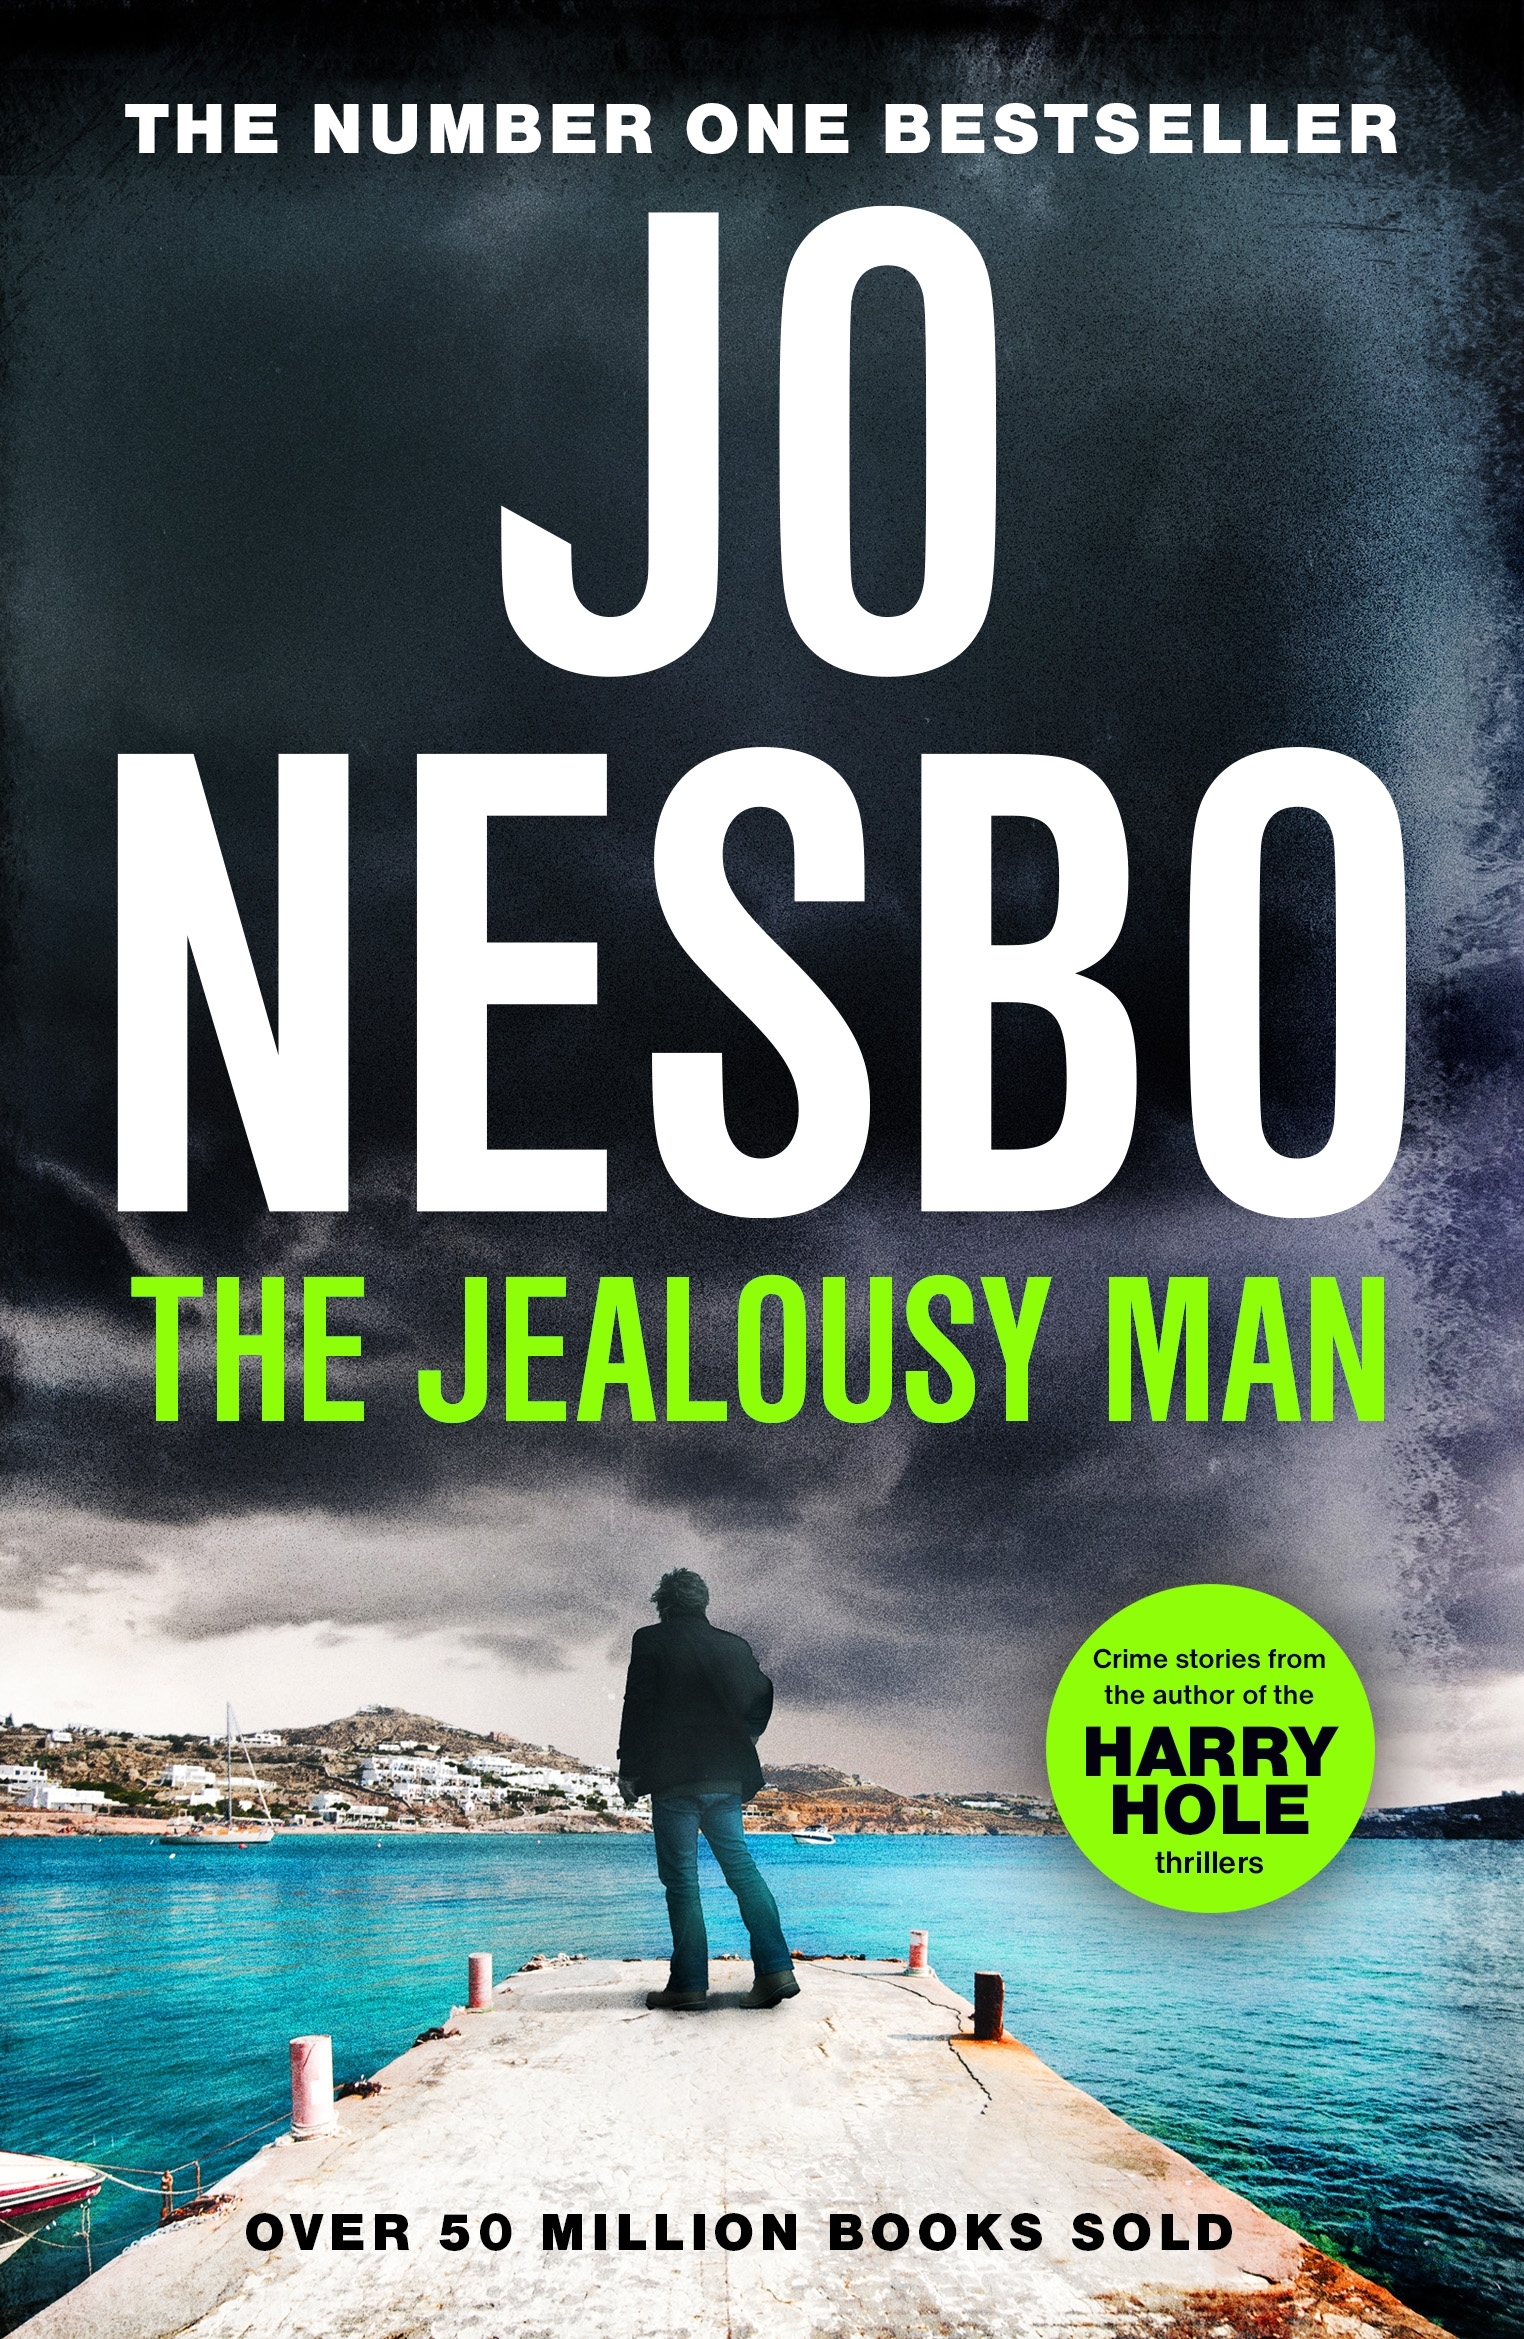 Books - Jo Nesbo